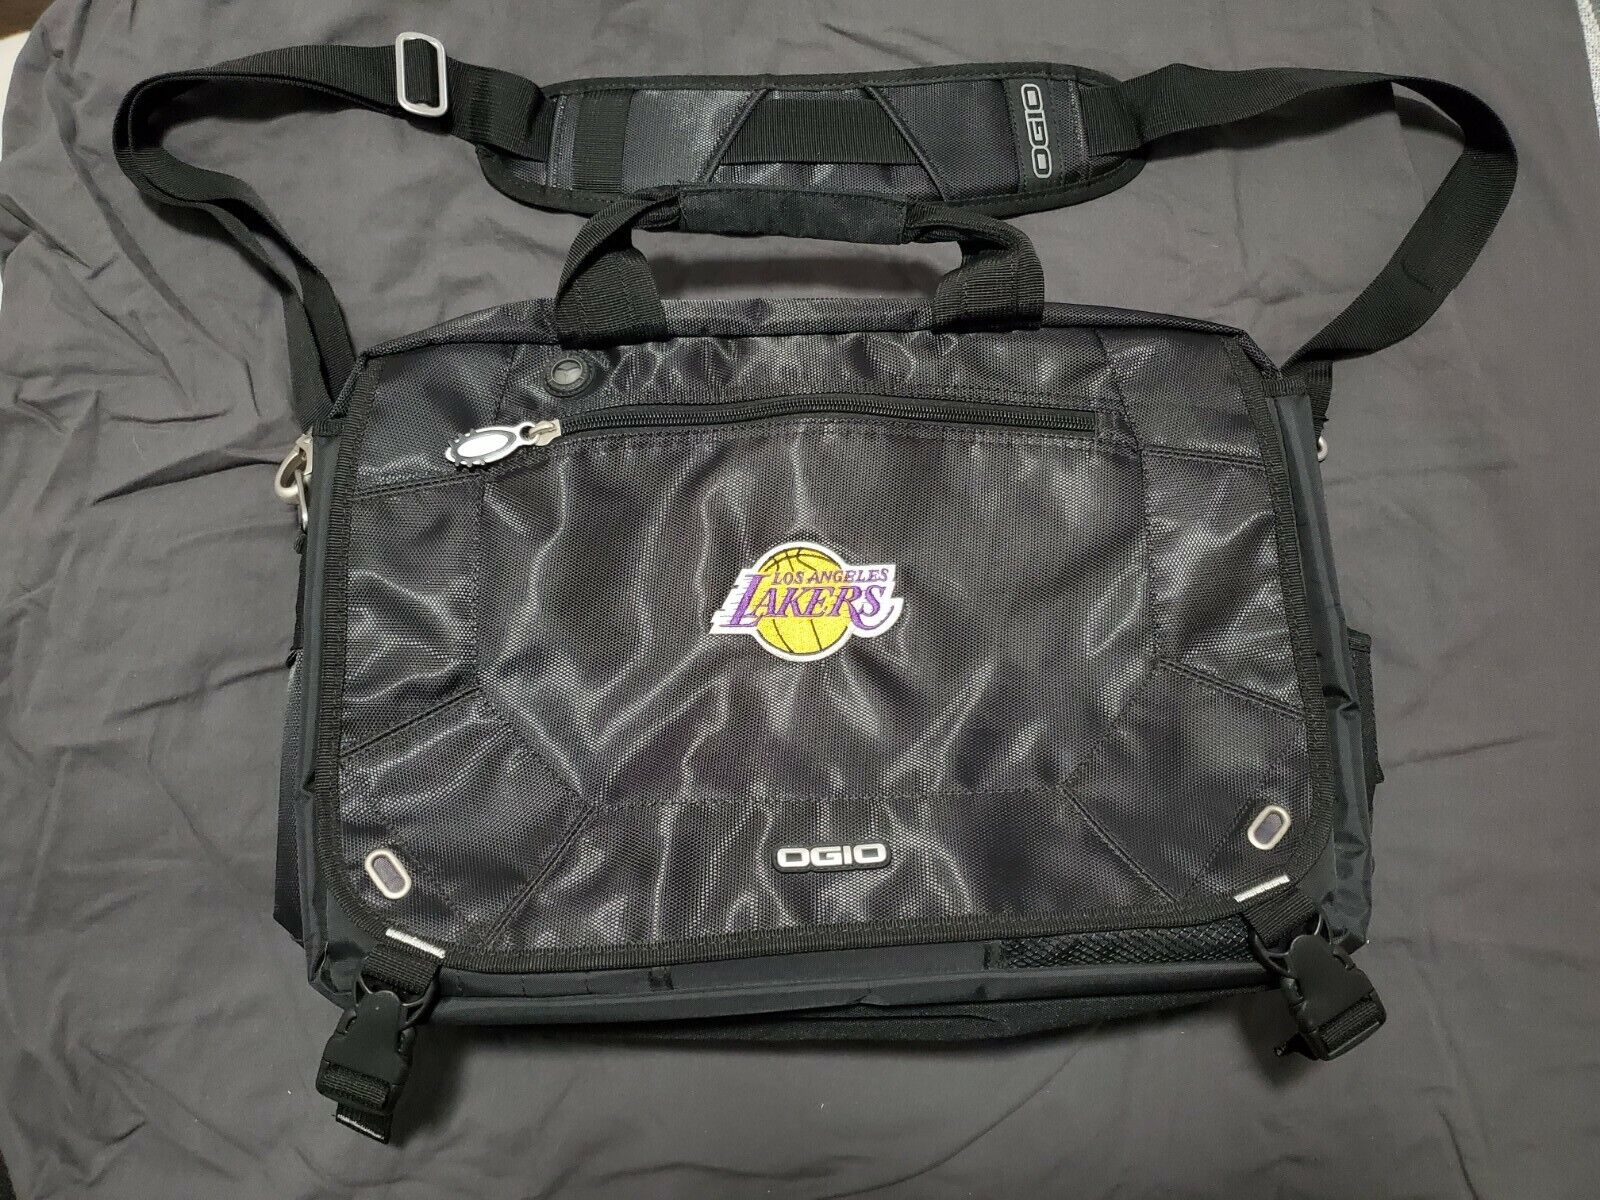 Ogio Jack Pack Messenger Bag With Lakers Logo